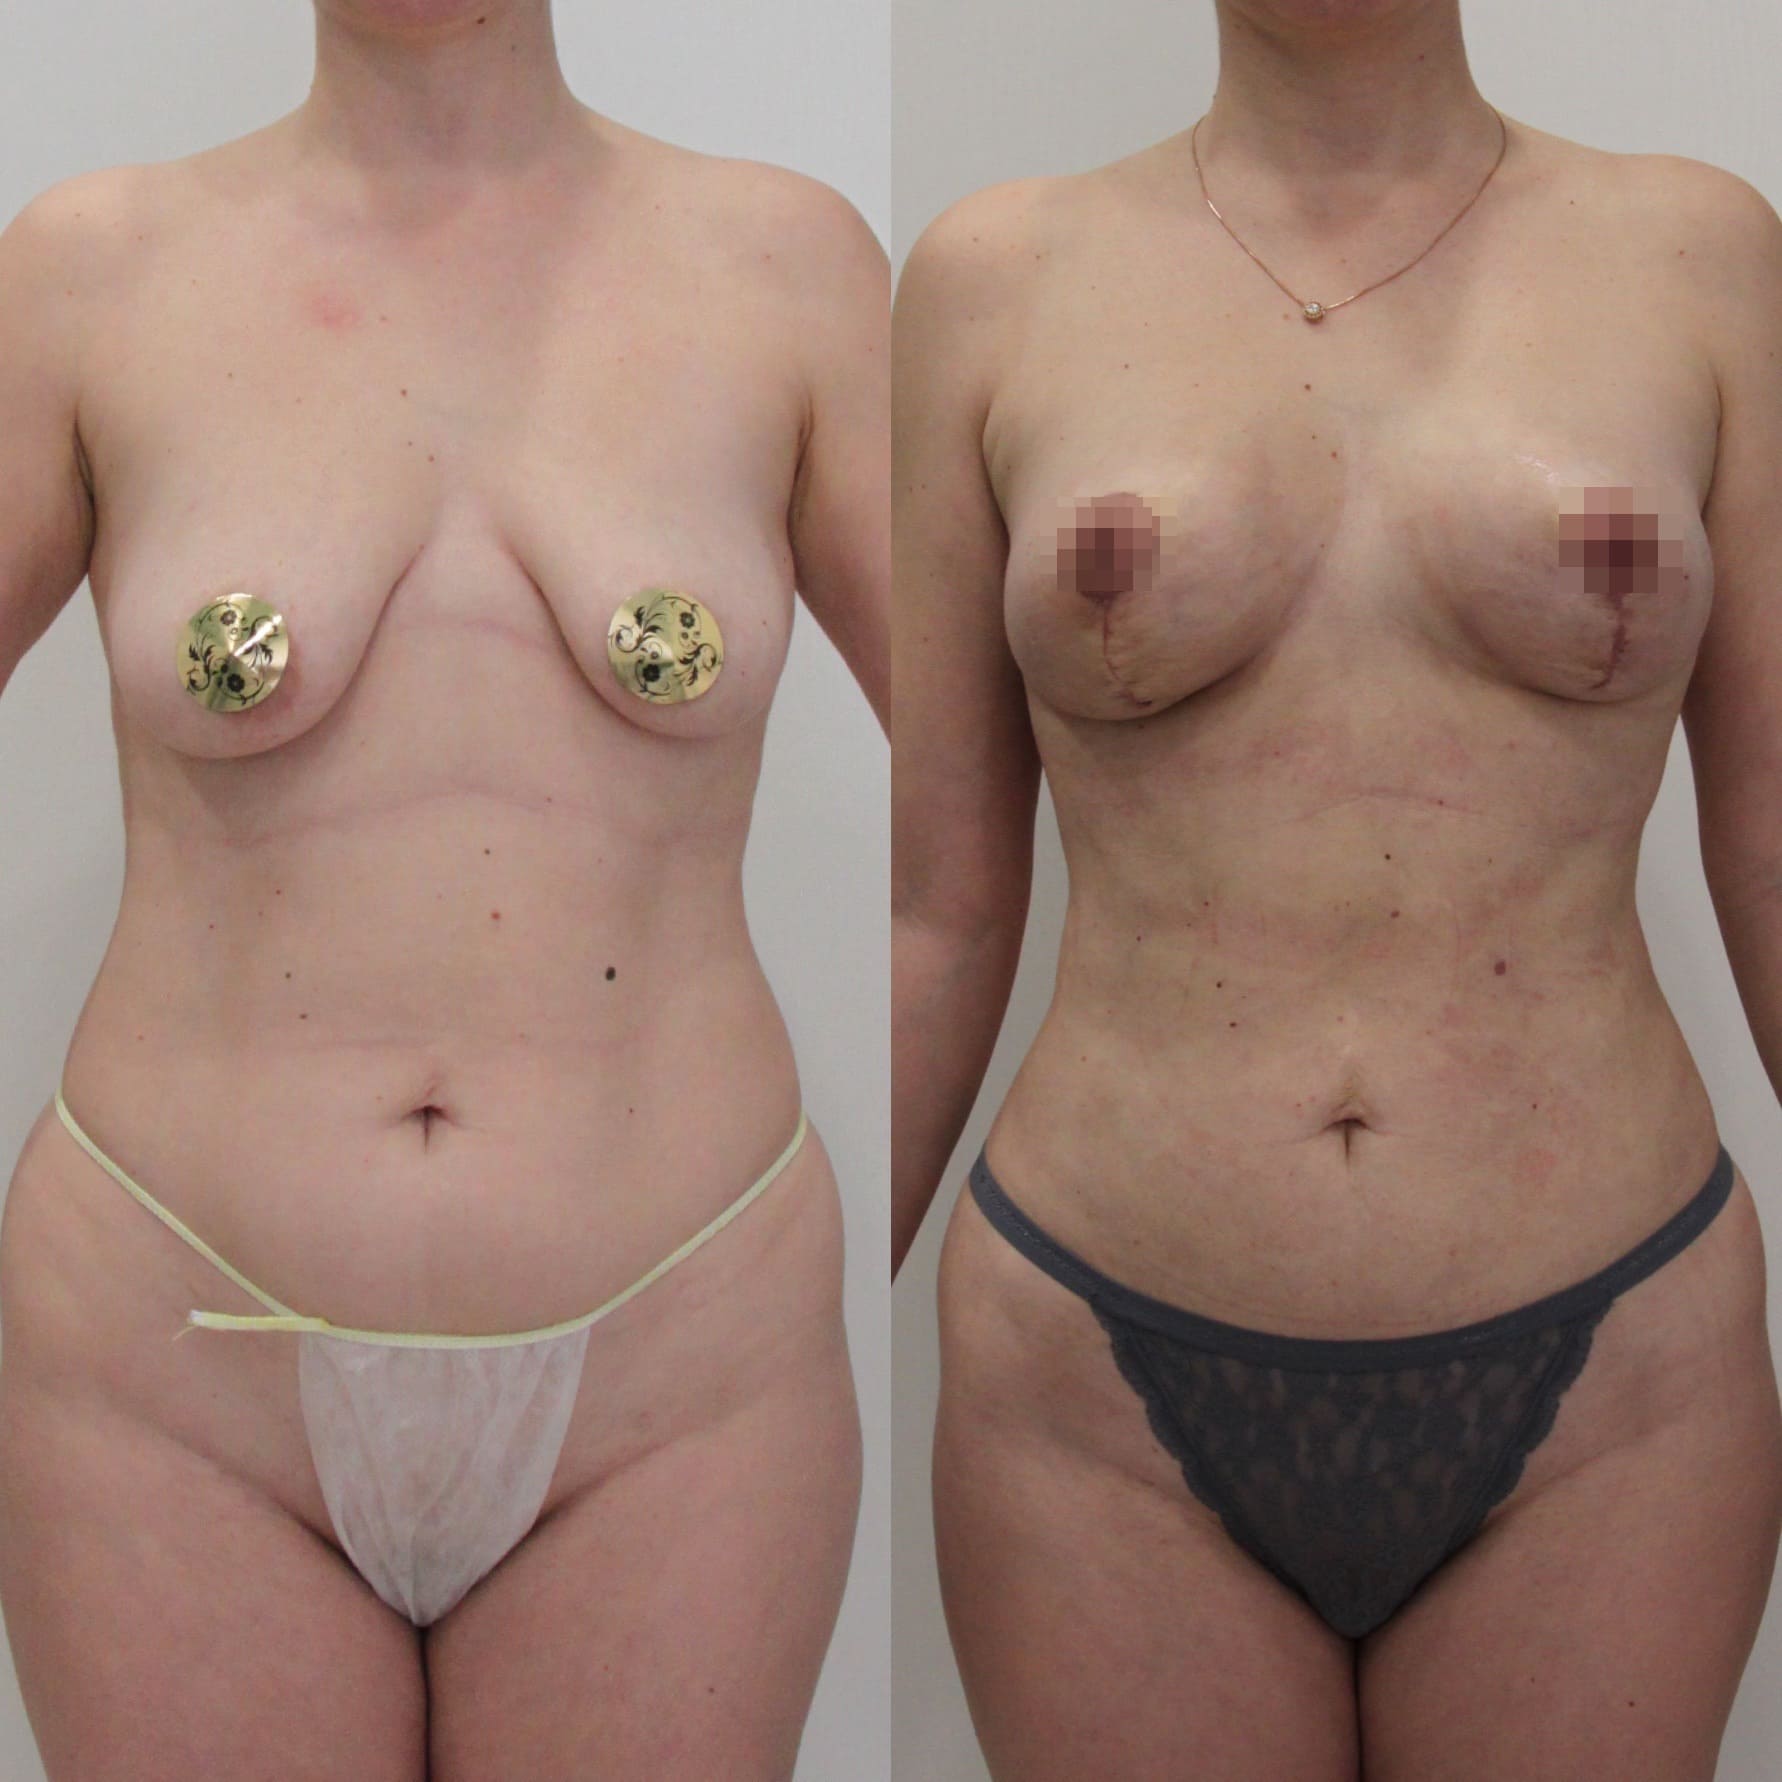 Подтяжка груди (мастопексия) - фото до и после